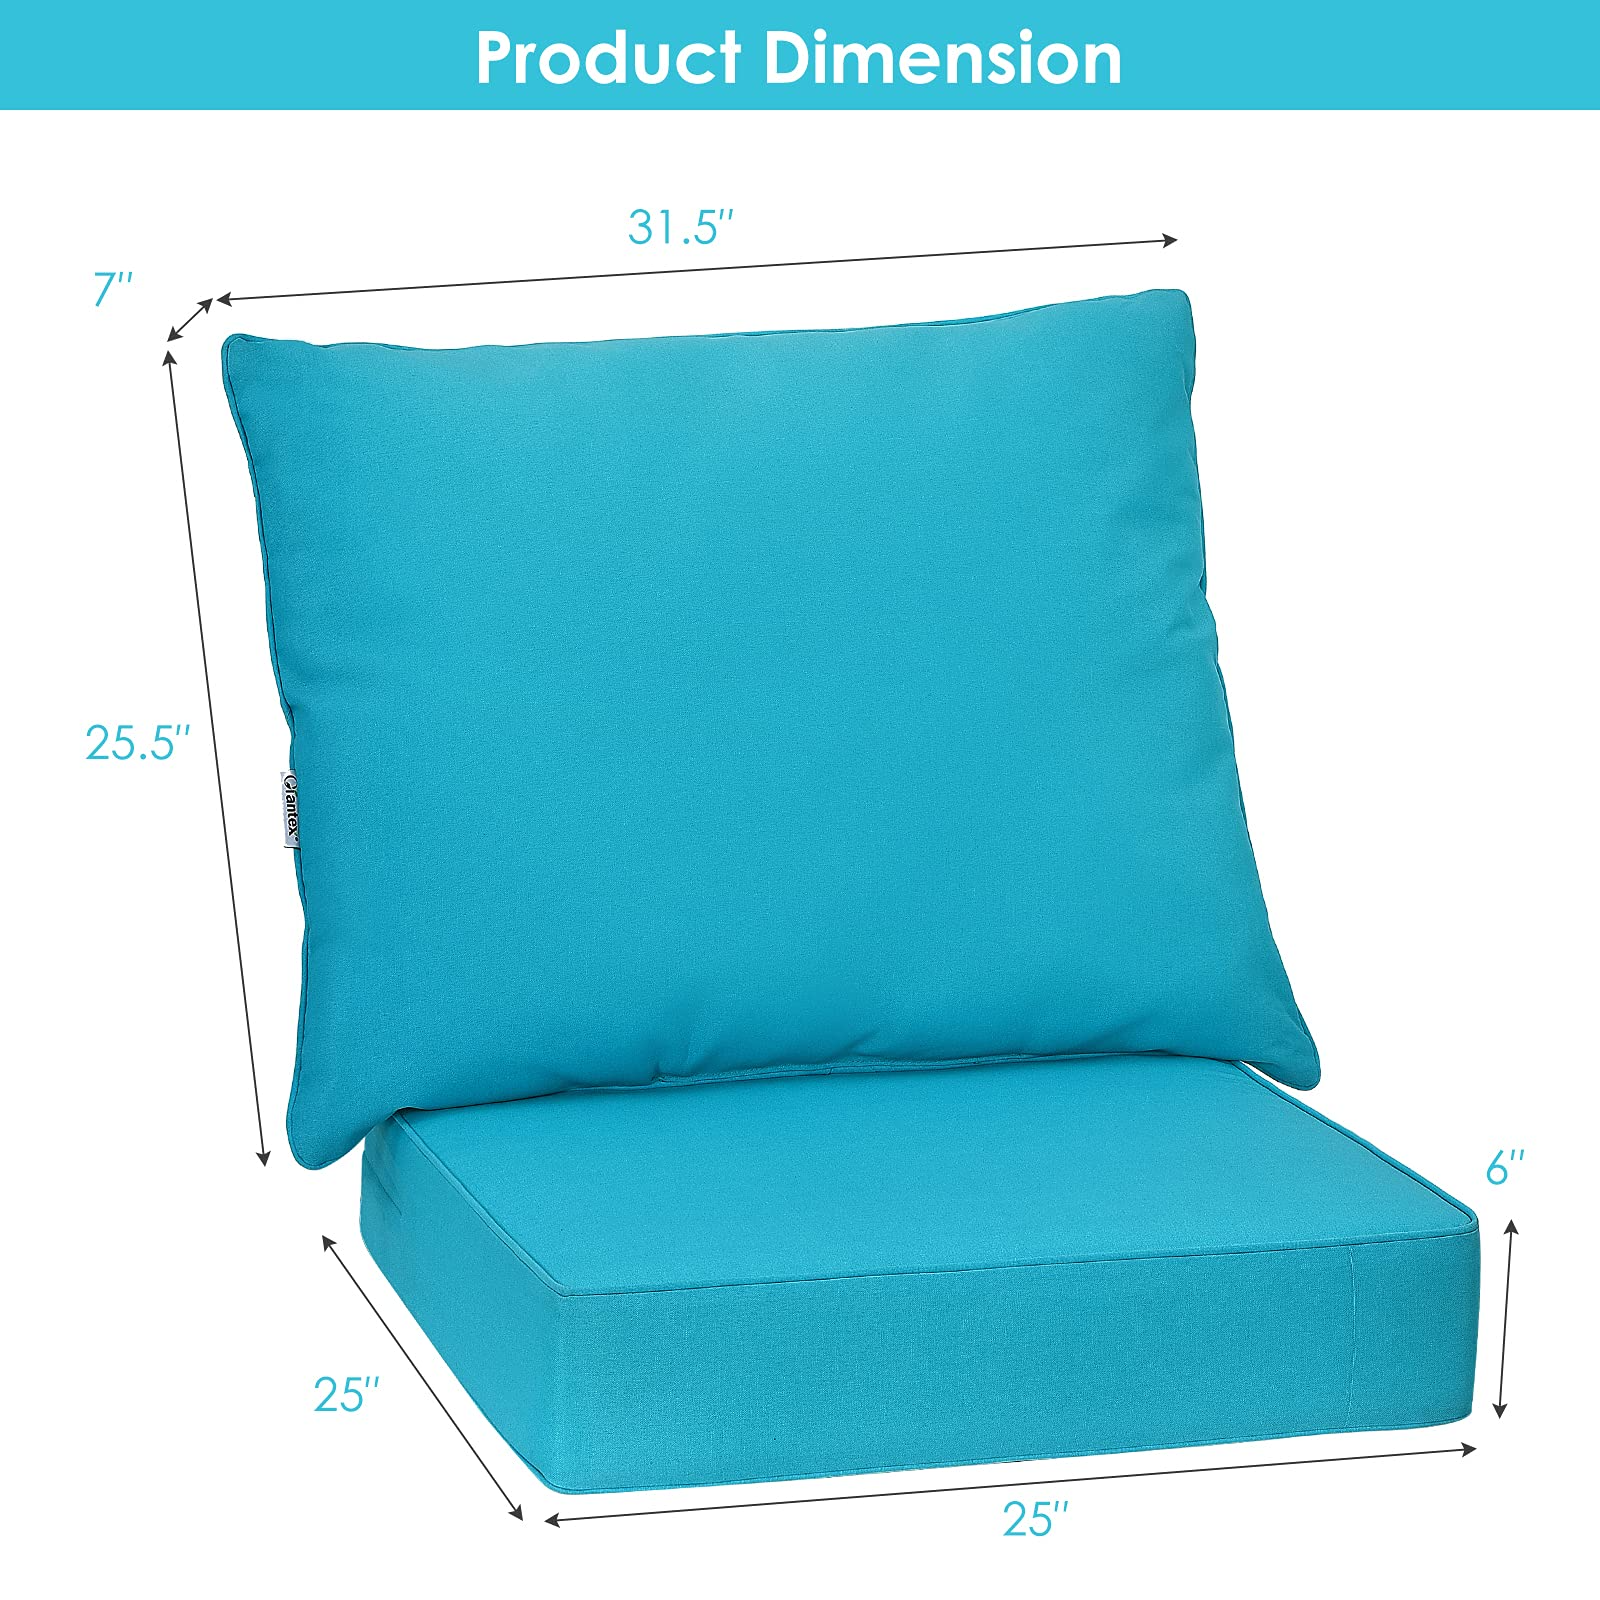 Giantex Patio Cushion Set with Pillow, Deep Seat and Back Cushion